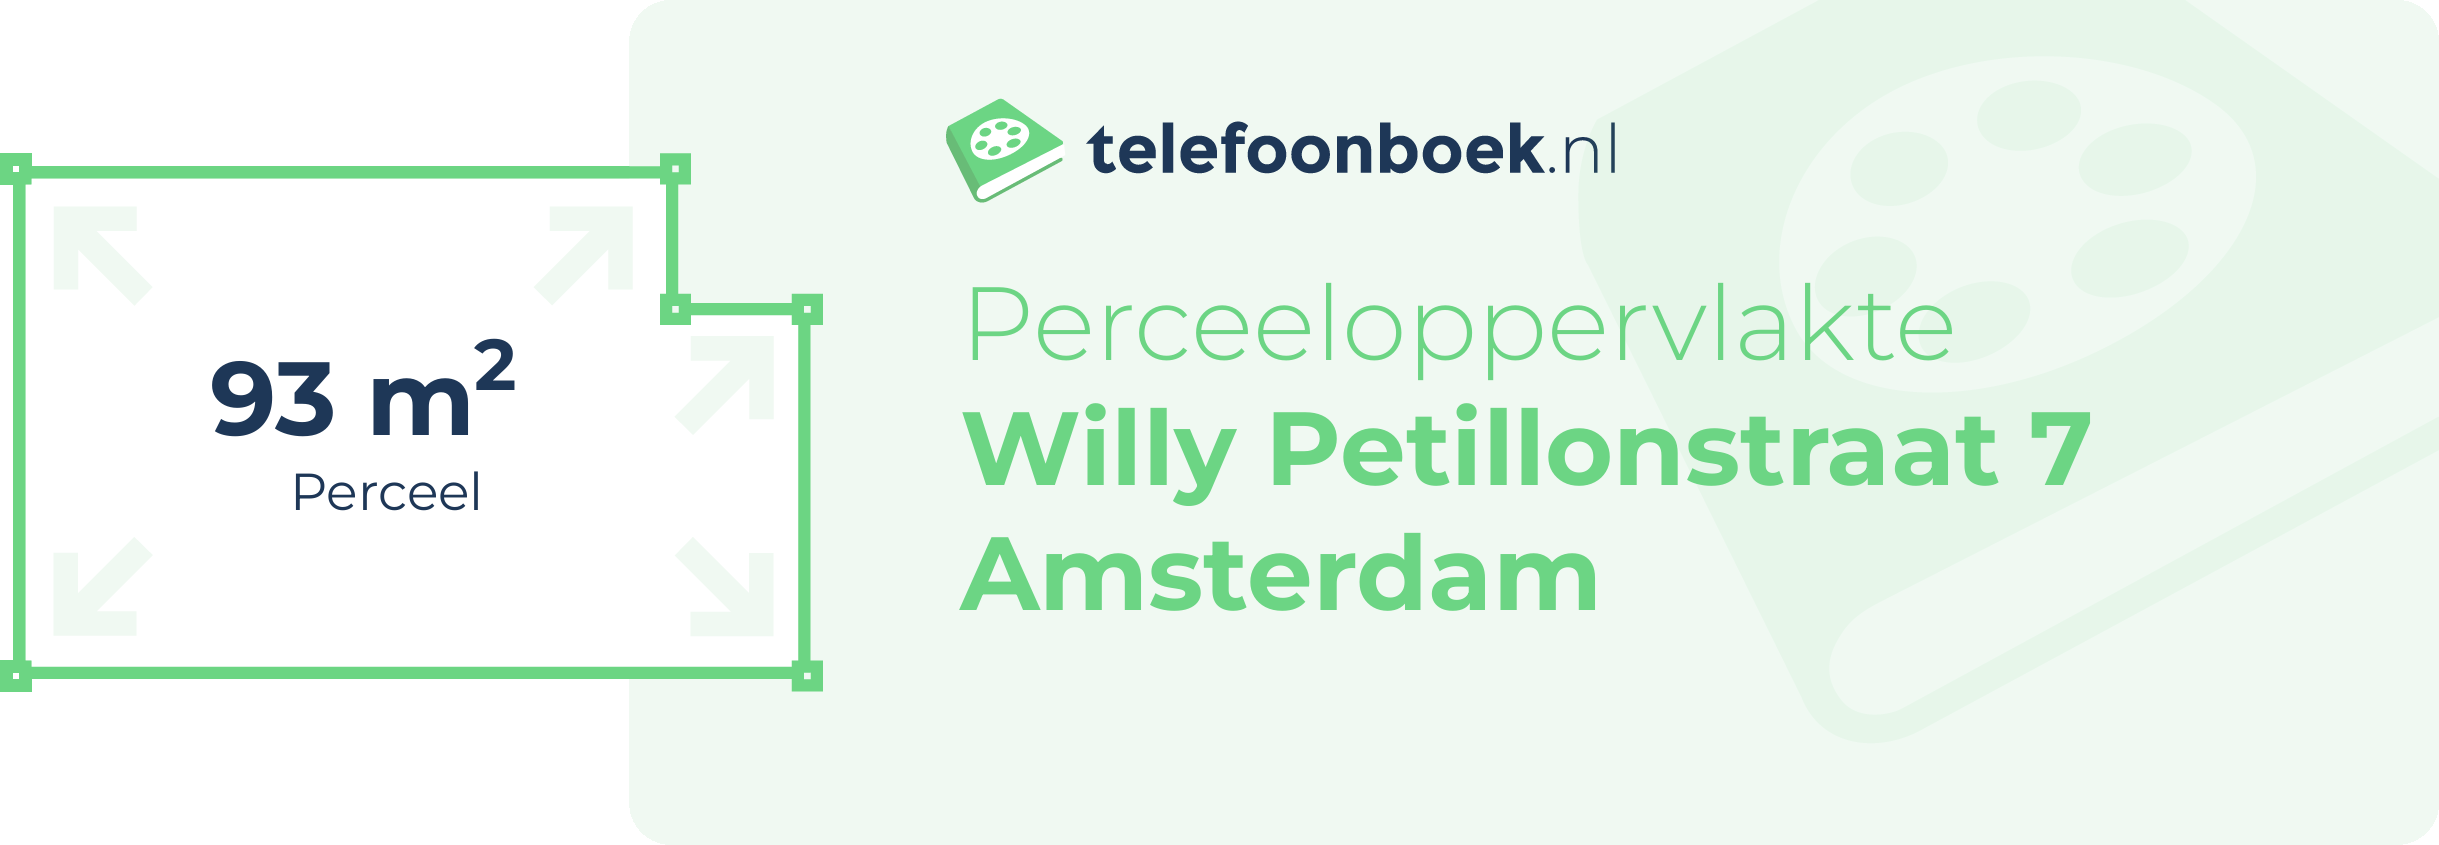 Perceeloppervlakte Willy Petillonstraat 7 Amsterdam